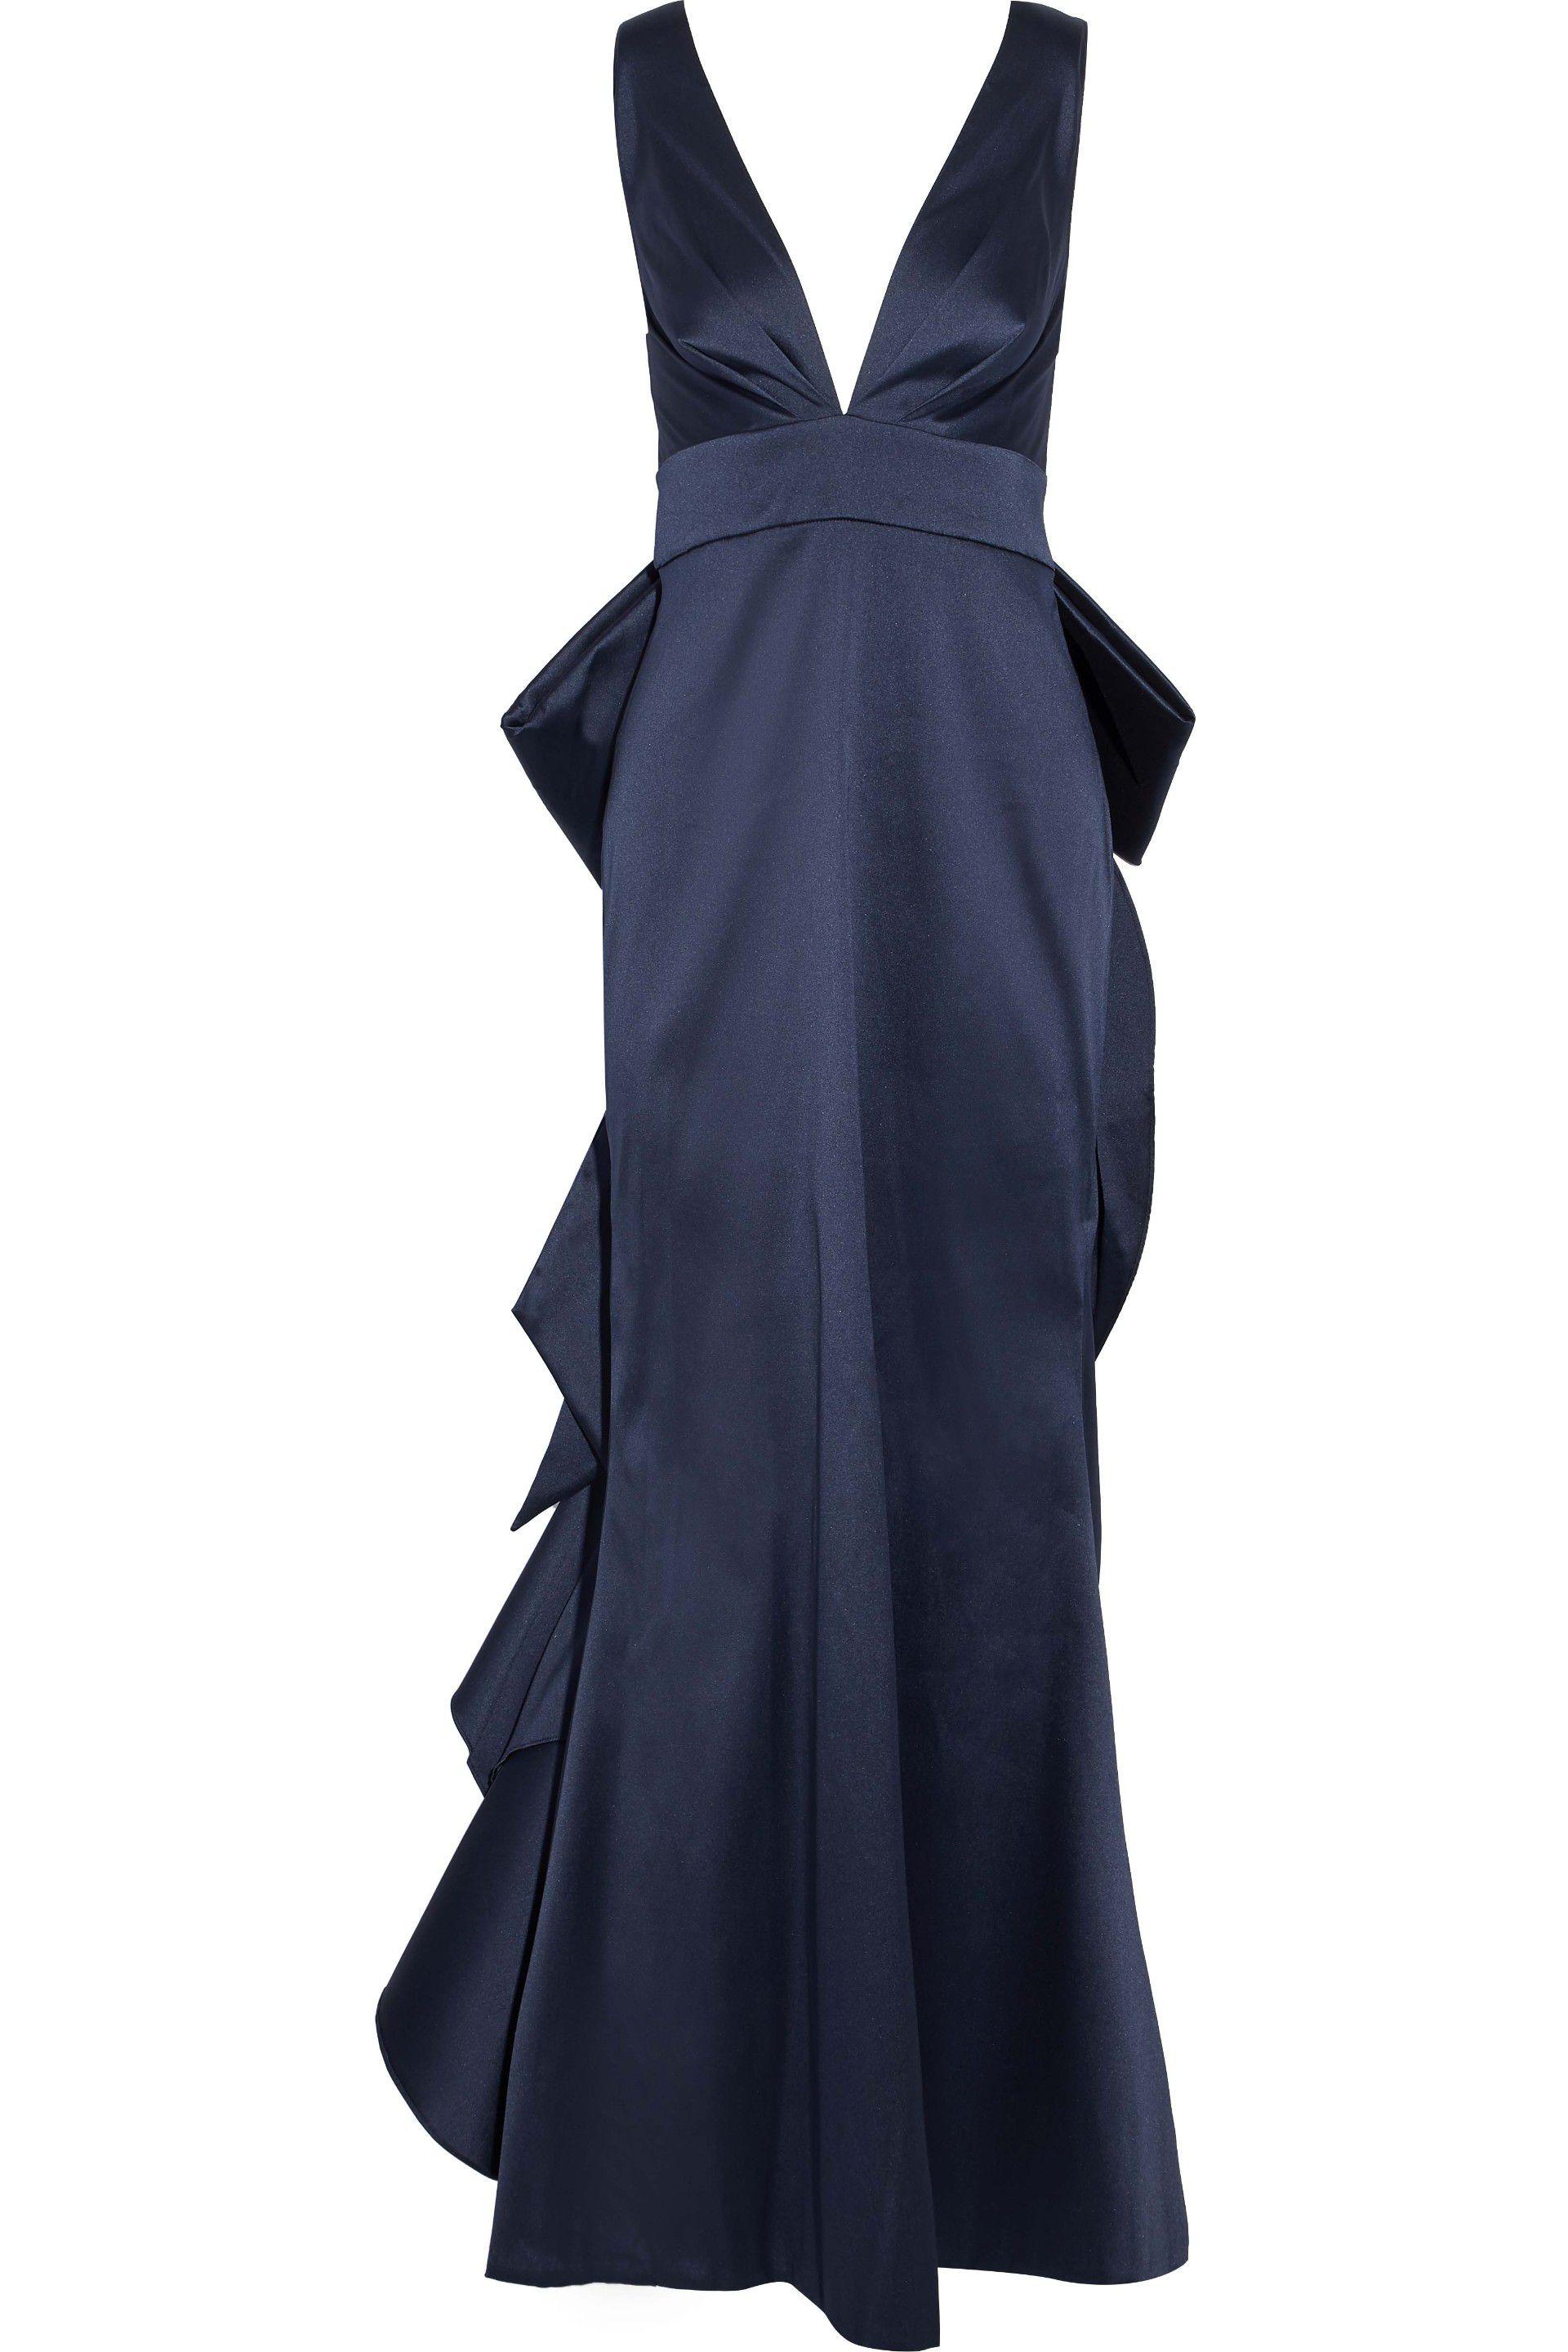 Sachin & Babi Topanga Bow-embellished Duchesse Satin-twill Gown in Blue ...